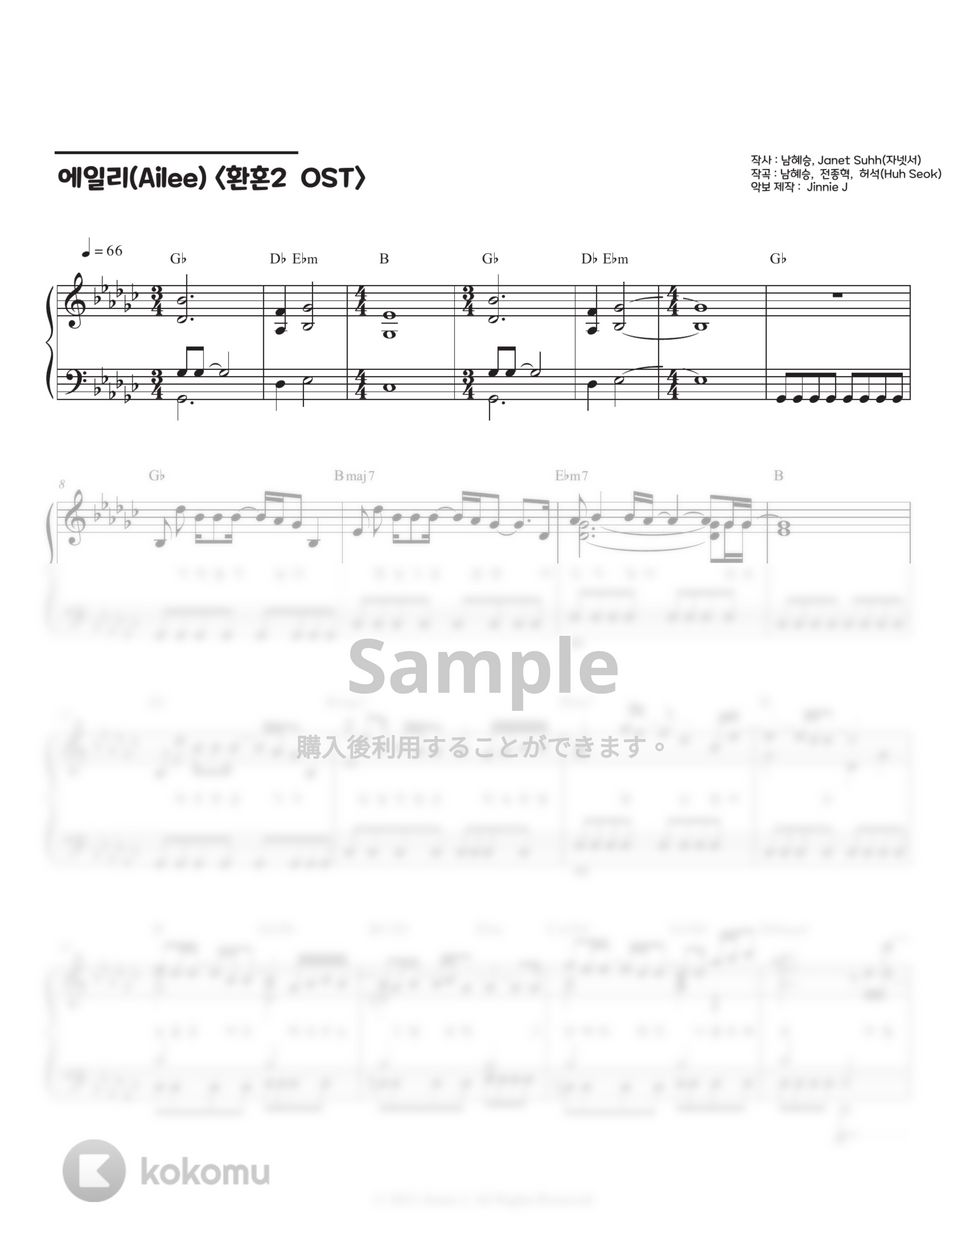 Ailee - I'm Sorry (還魂 2 OST) (Gb, G key) by Jinnie J